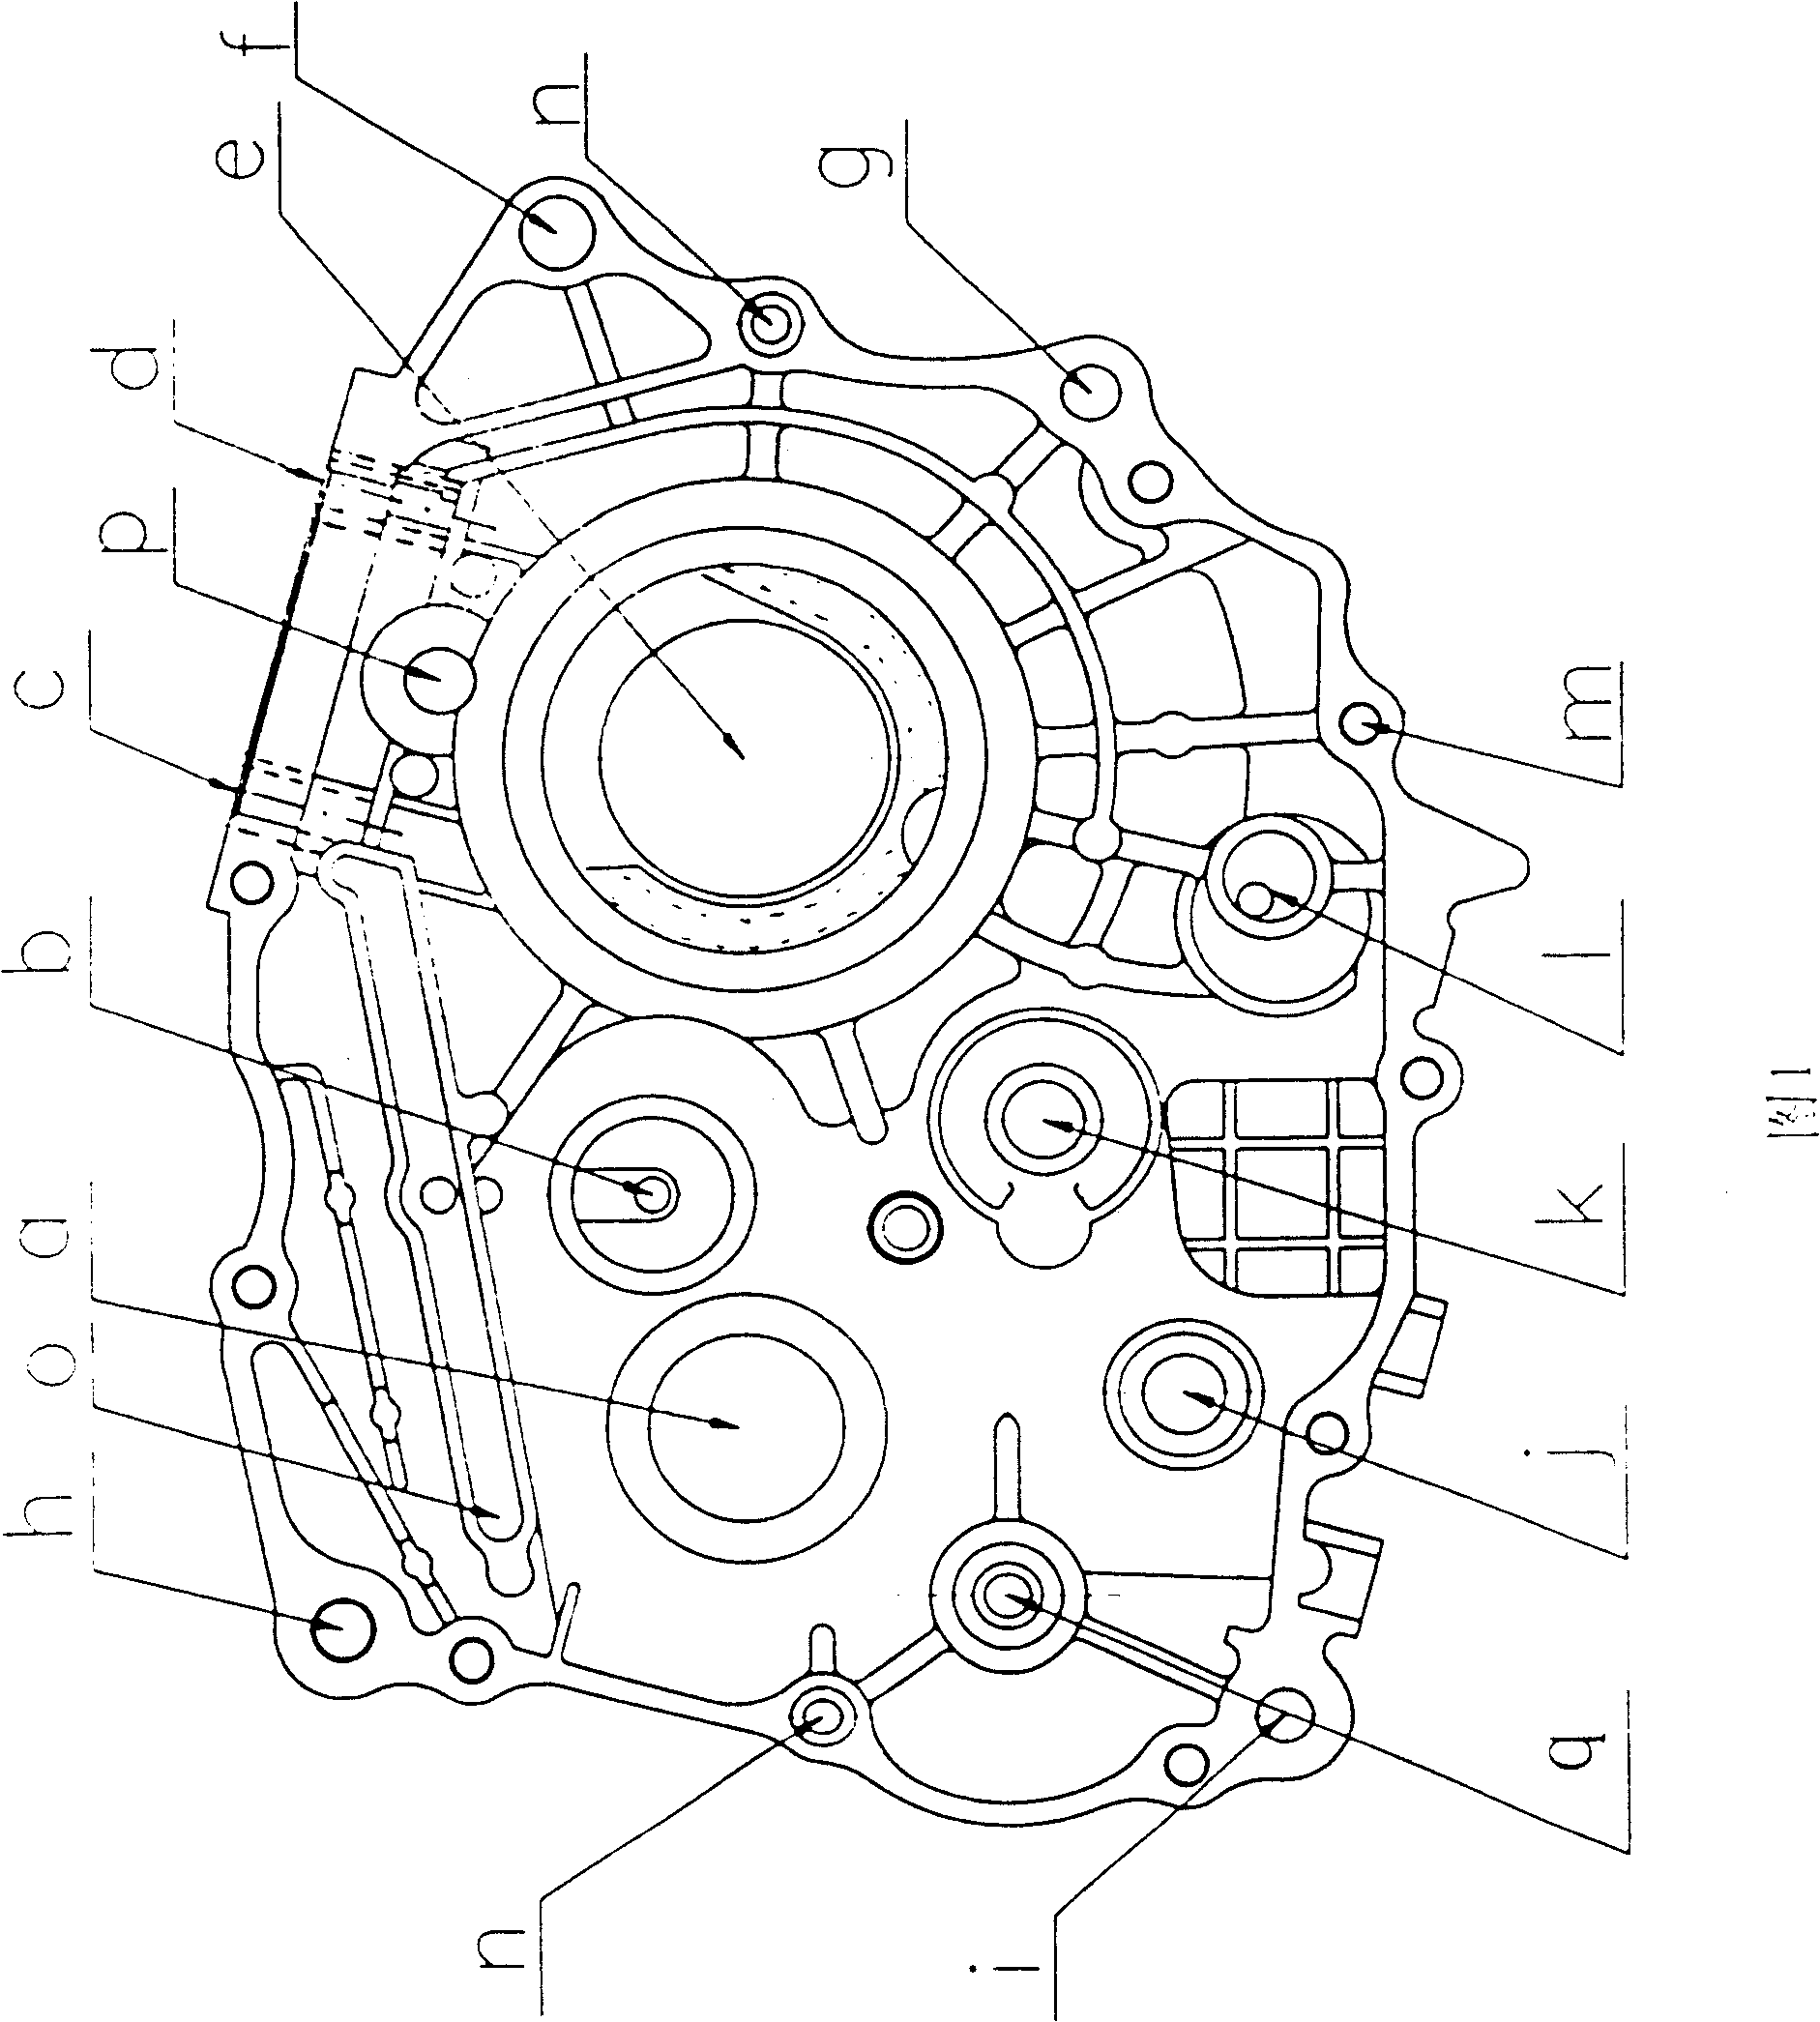 Vibration-reducing type engine crankcase of motorcycle